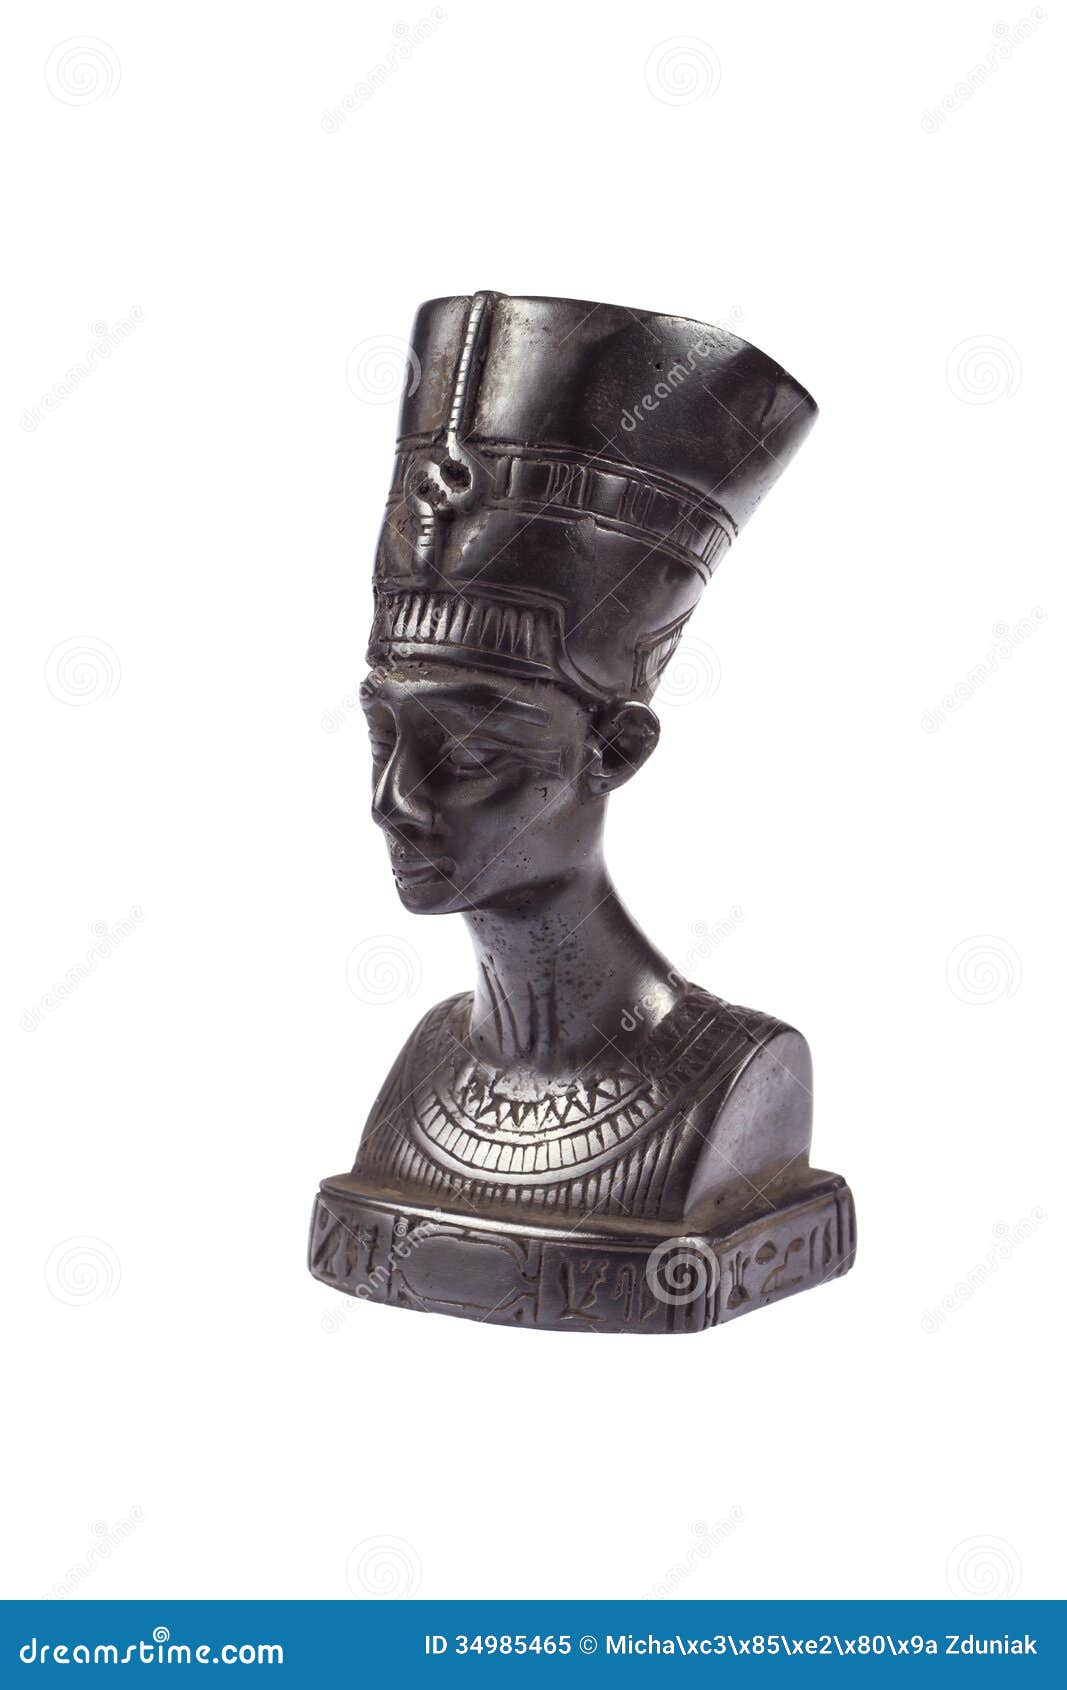 Souvenir from egypt